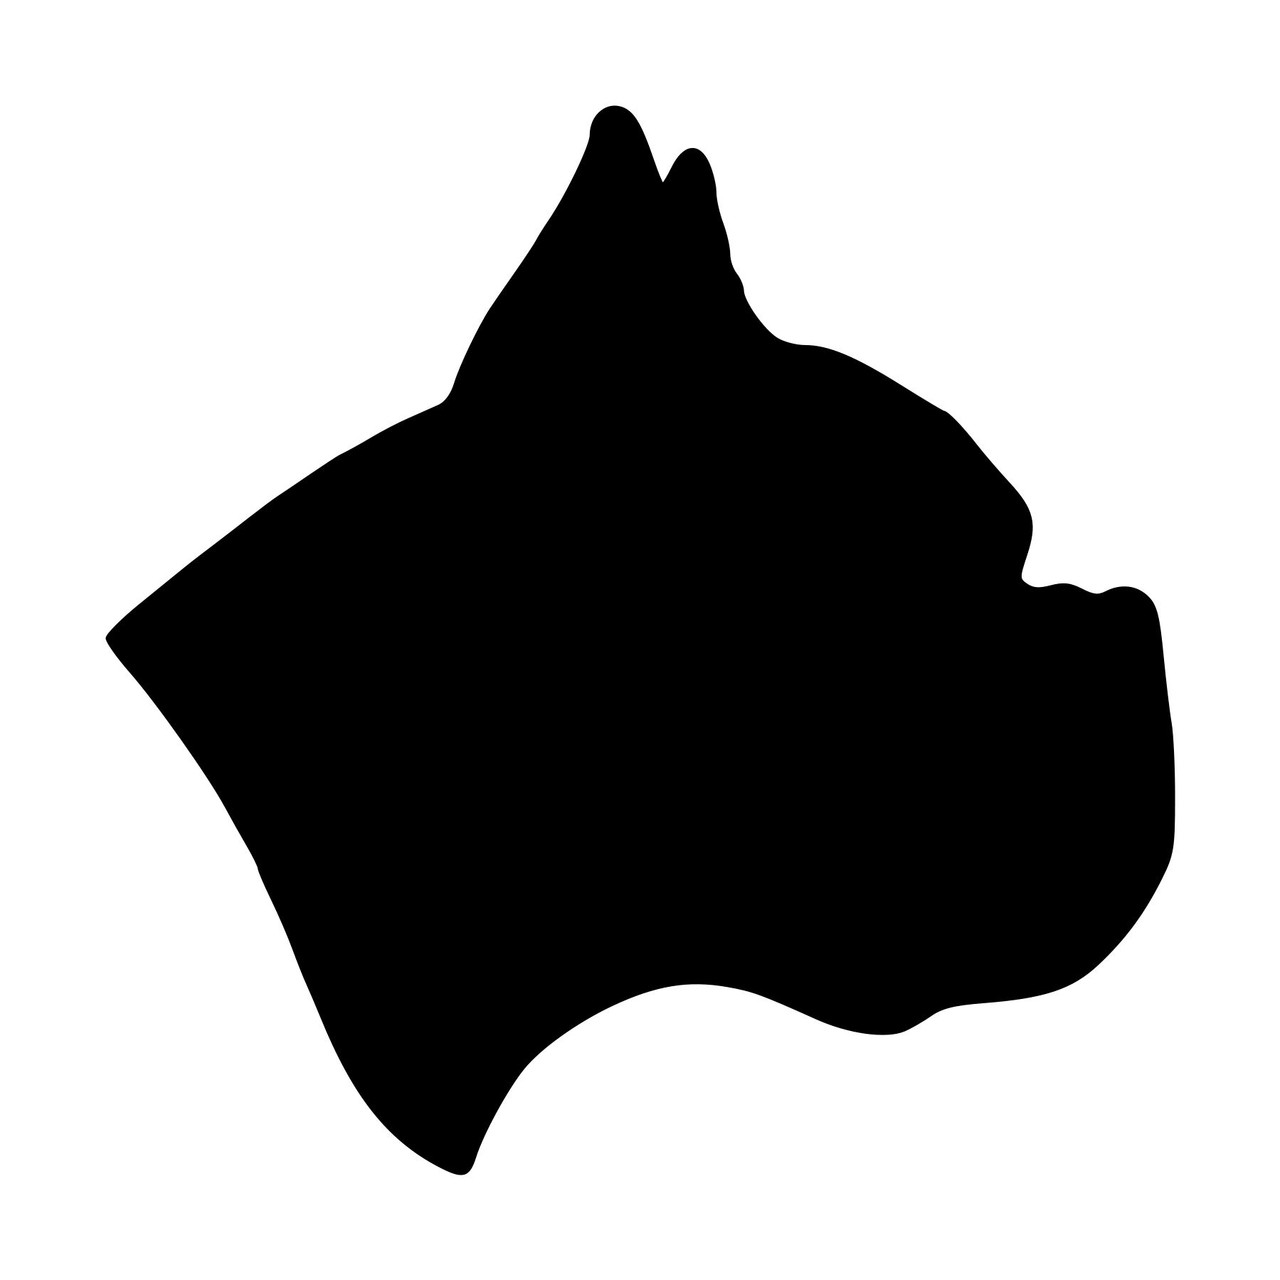 boxer dog silhouette